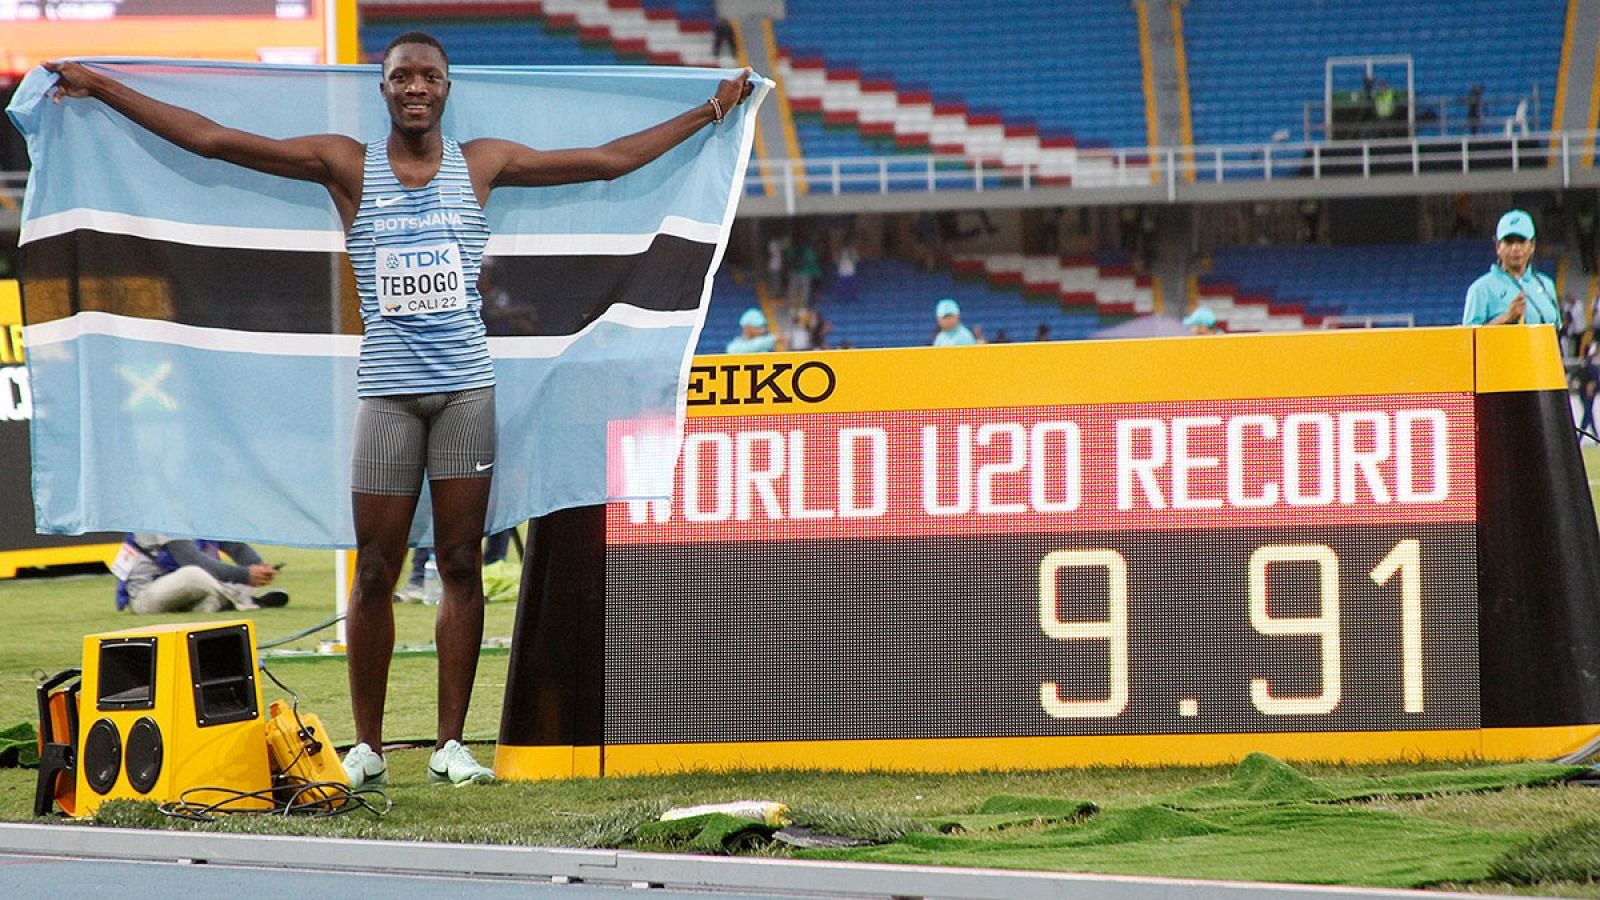 Letsile Tebogo, el sucesor de Usain Bolt